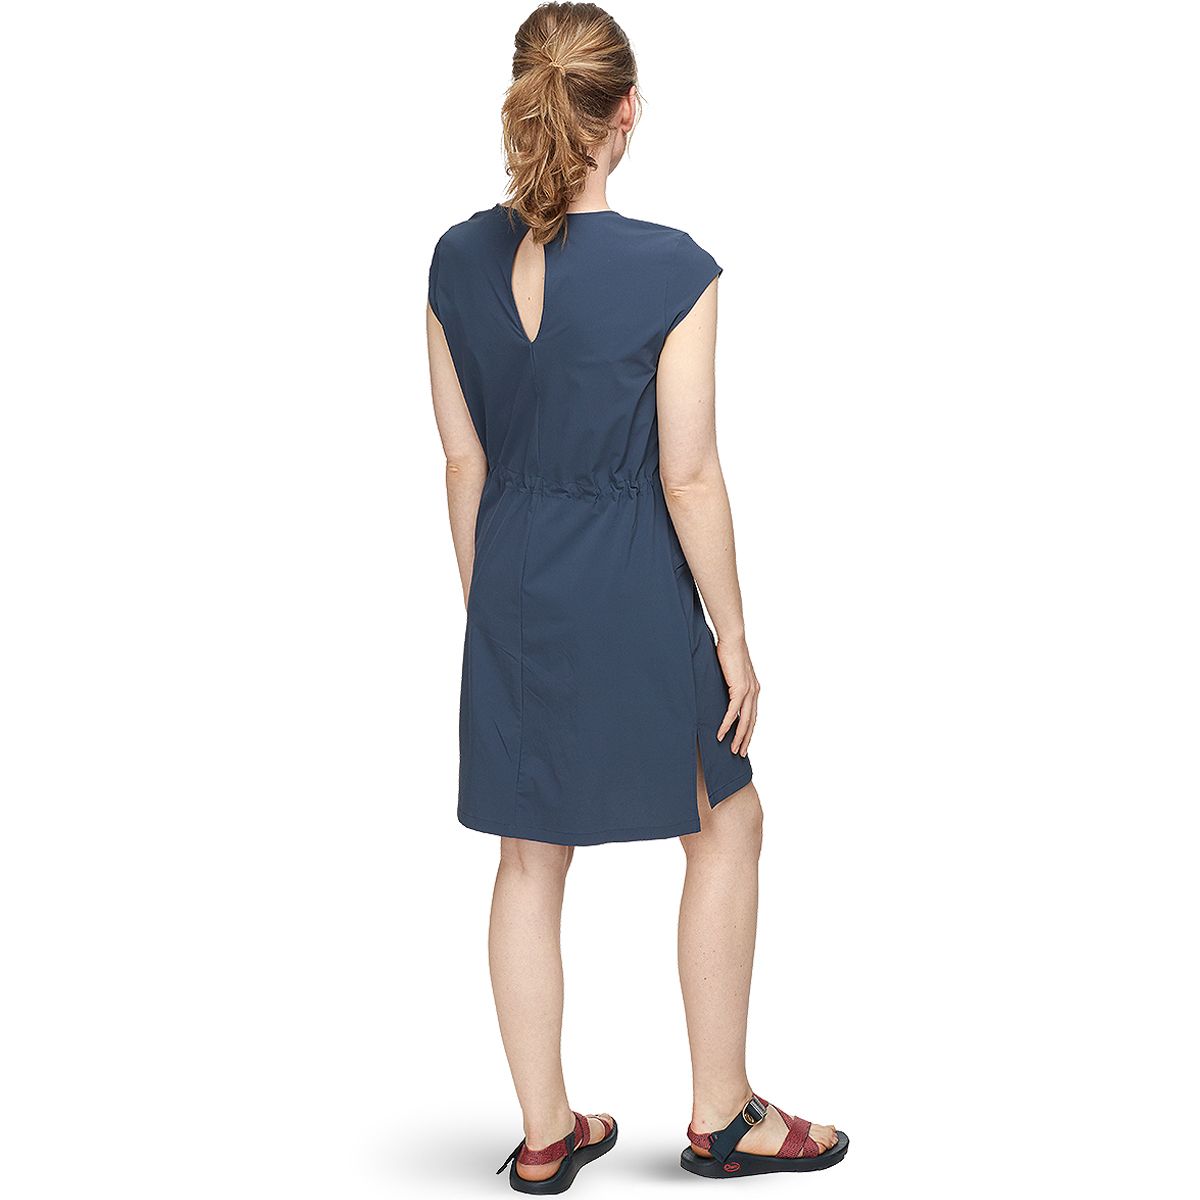 Fjallraven High Coast Lite Dress - Women's | eBay